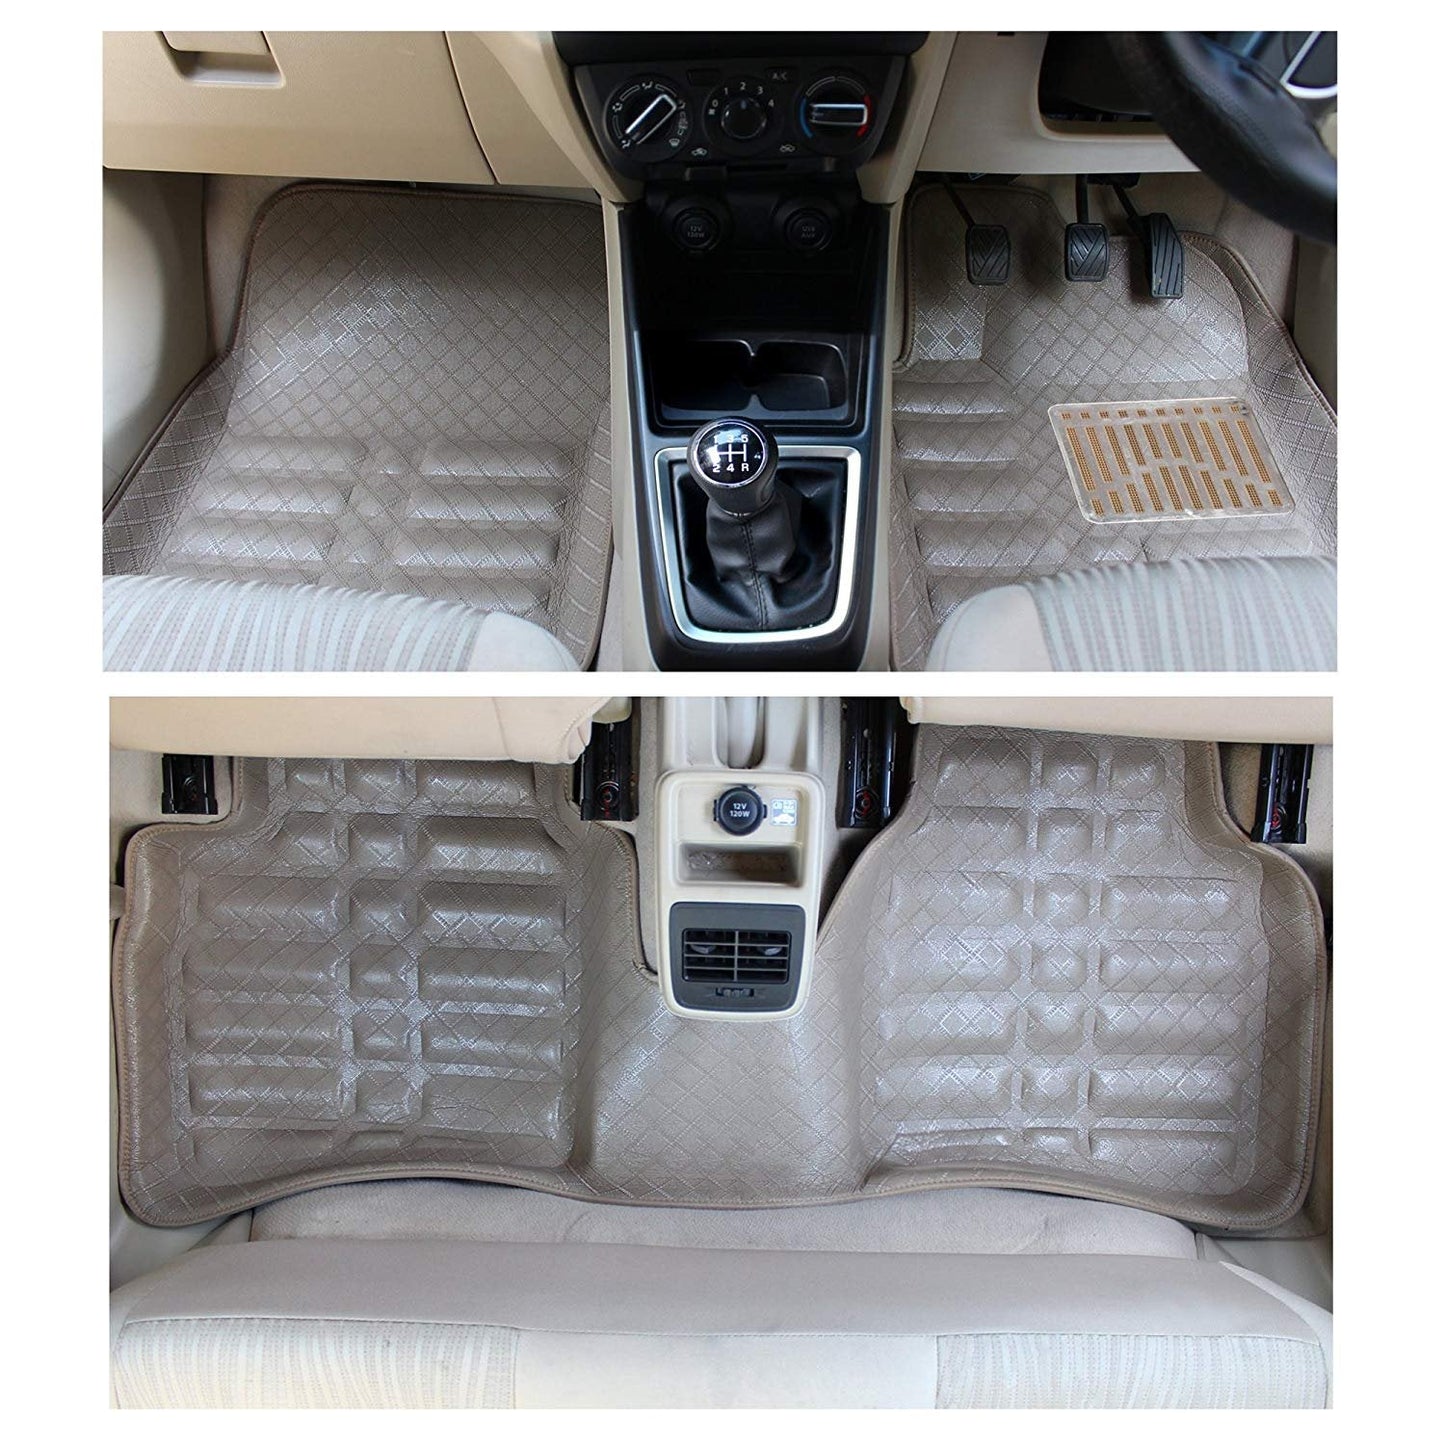 Oshotto 4D Artificial Leather Car Floor Mats For Maruti Suzuki Ertiga 2012-2018 (Set of 5) - Beige